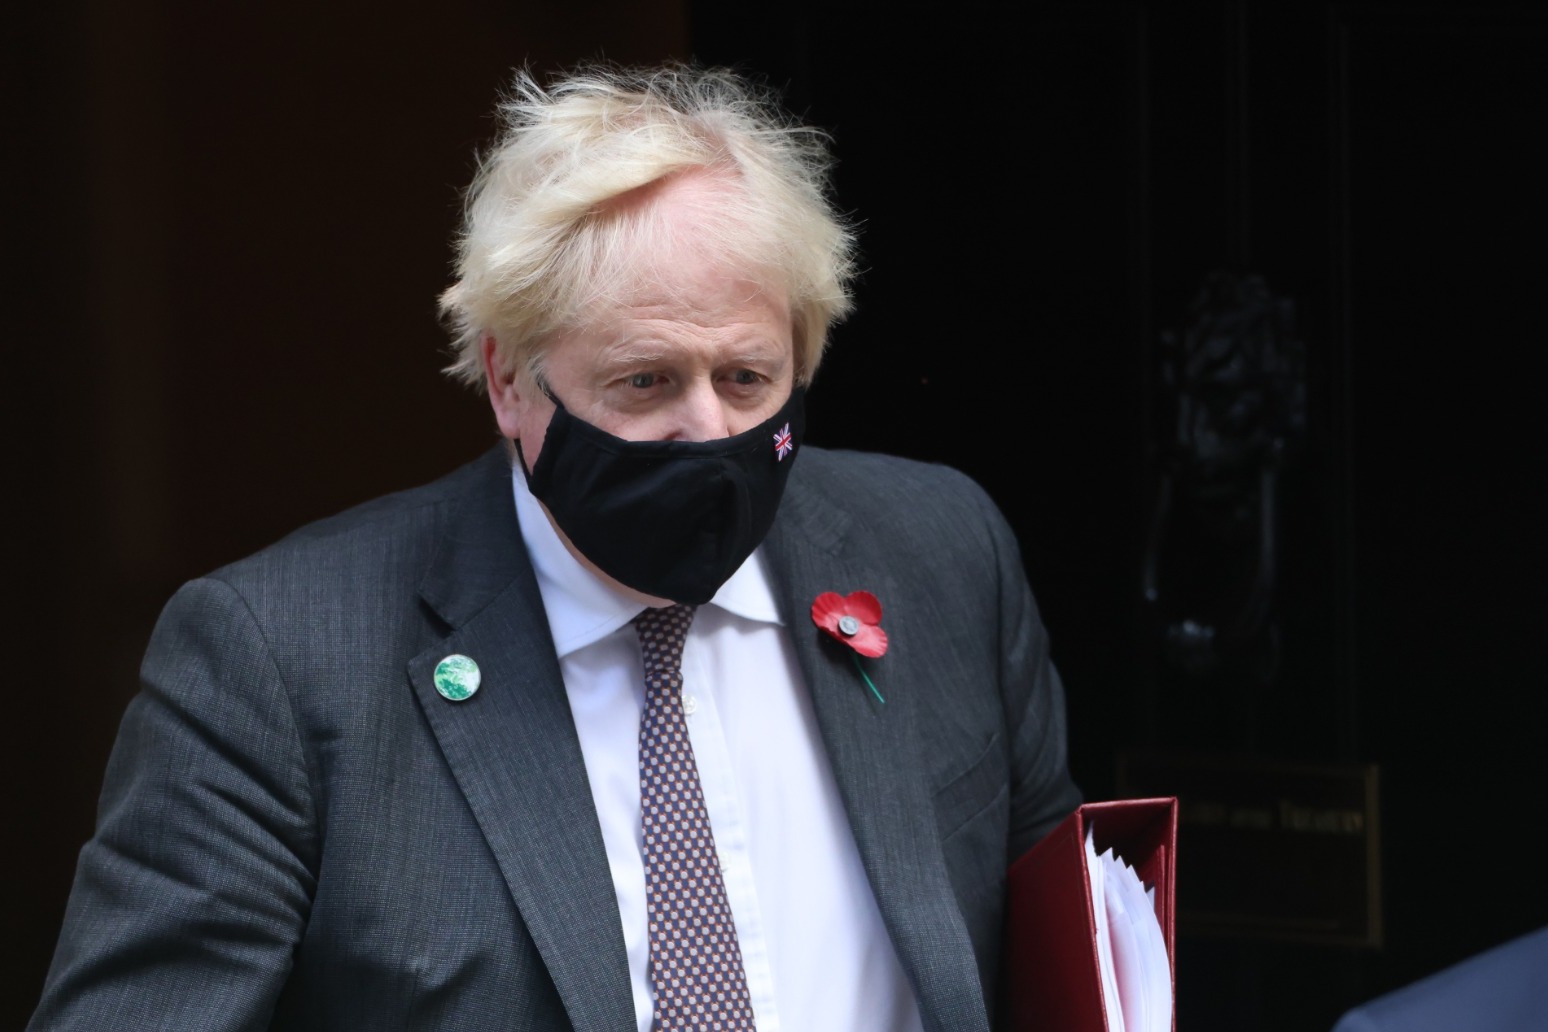 Boris Johnson faces demands for public inquiry into sleaze allegations 